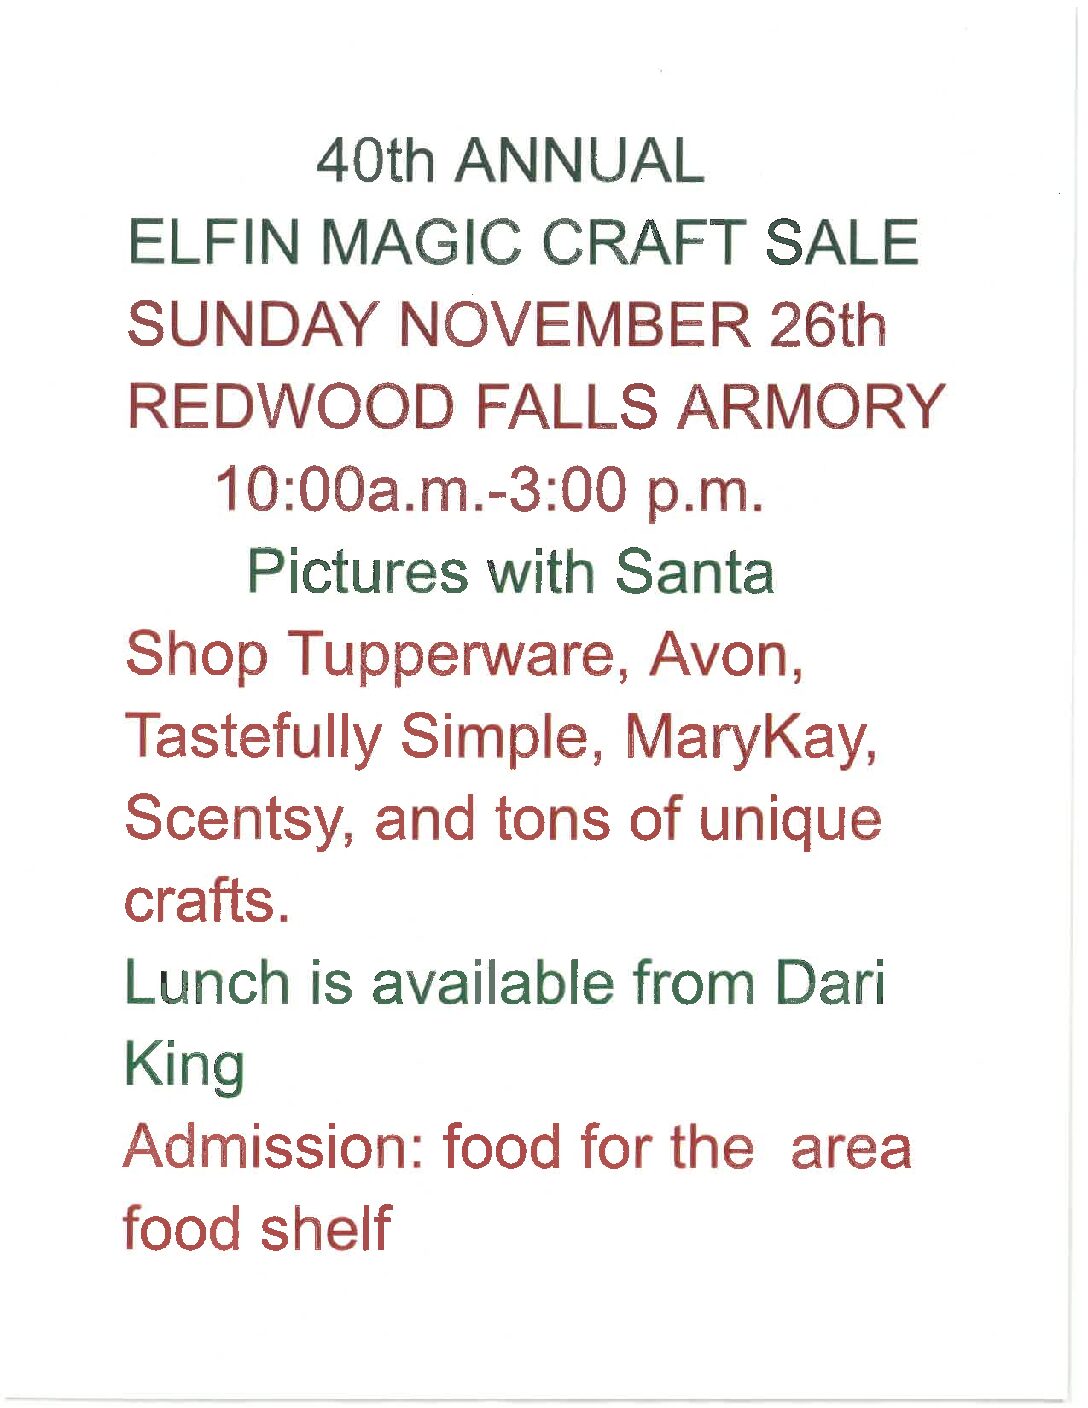 <h1 class="tribe-events-single-event-title">40th Annual Elfin Magic Craft Sale</h1>